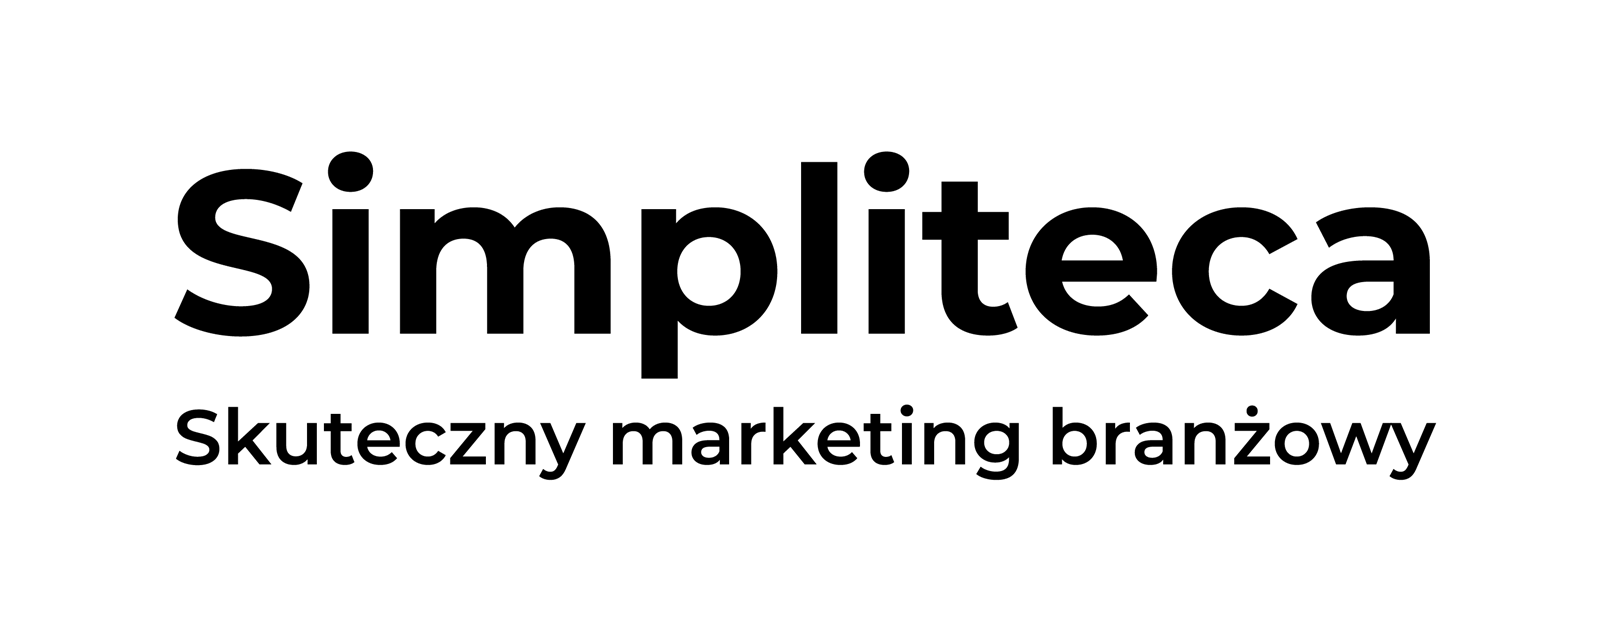 Simpliteca - skuteczny marketing branżowy